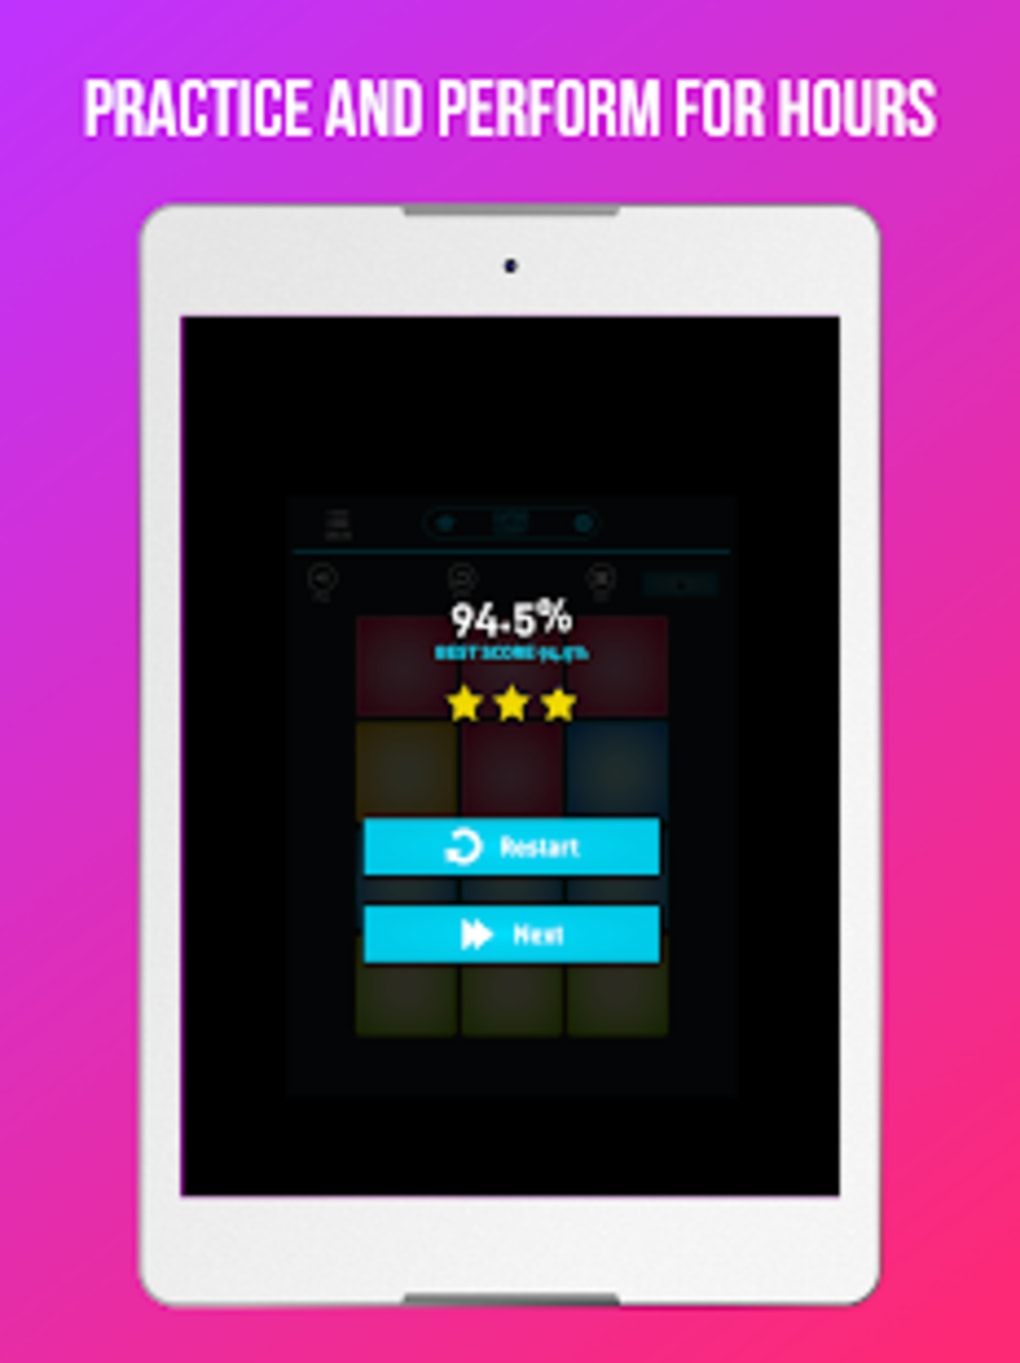 beat maker pro app